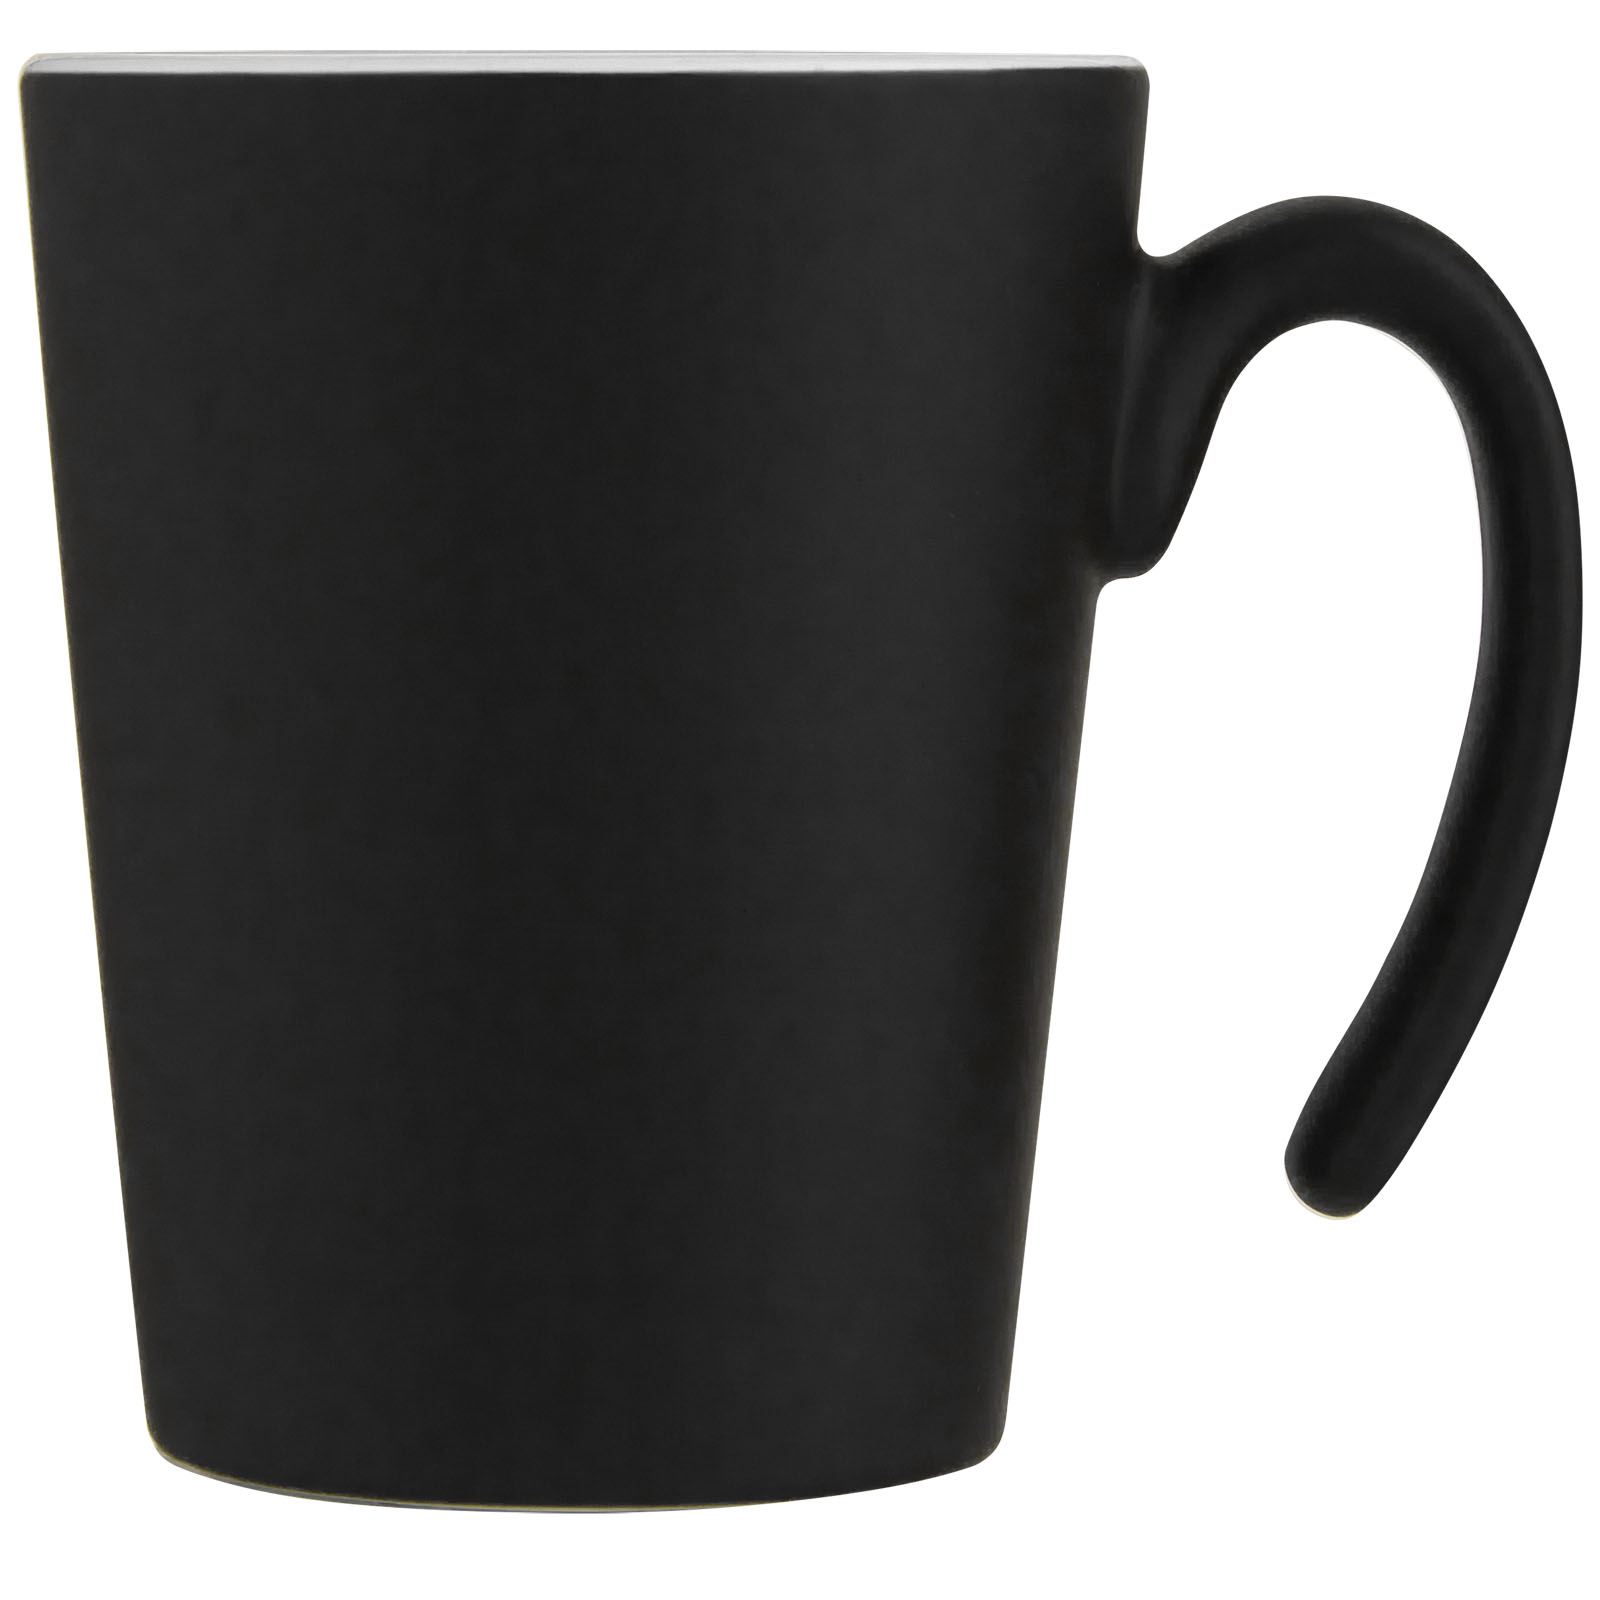 Advertising Standard mugs - Oli 360 ml ceramic mug with handle - 1